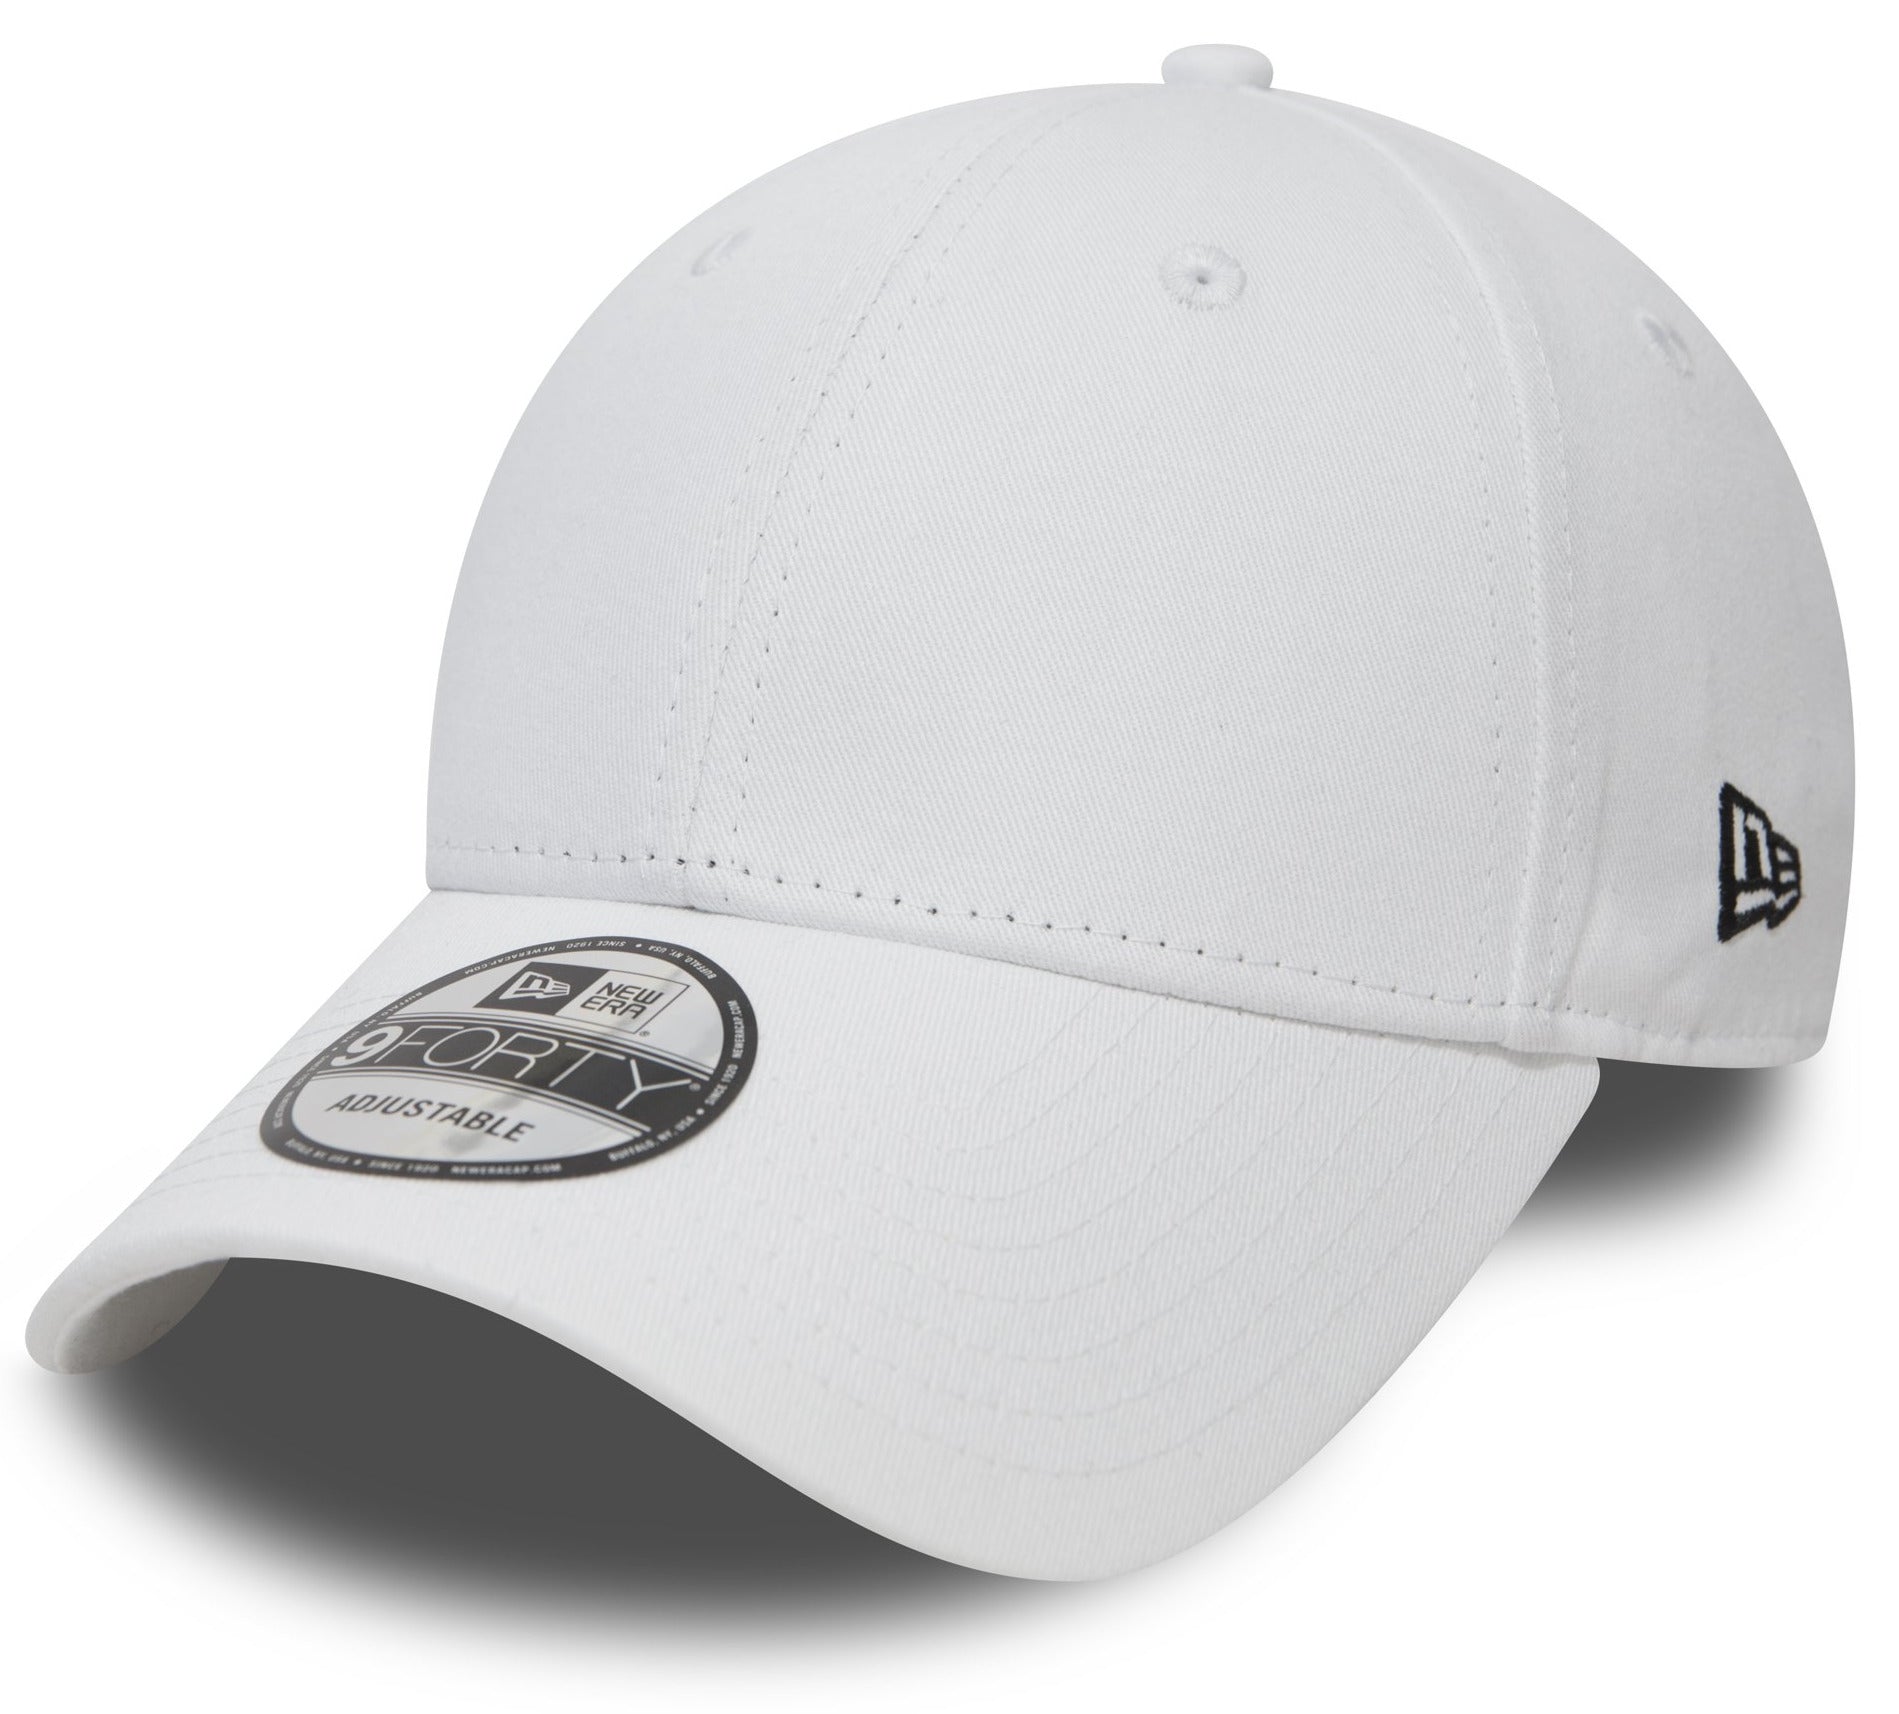 Ongrijpbaar Vijf Spijsverteringsorgaan New Era 940 Basic Adjustable White Baseball Cap – lovemycap